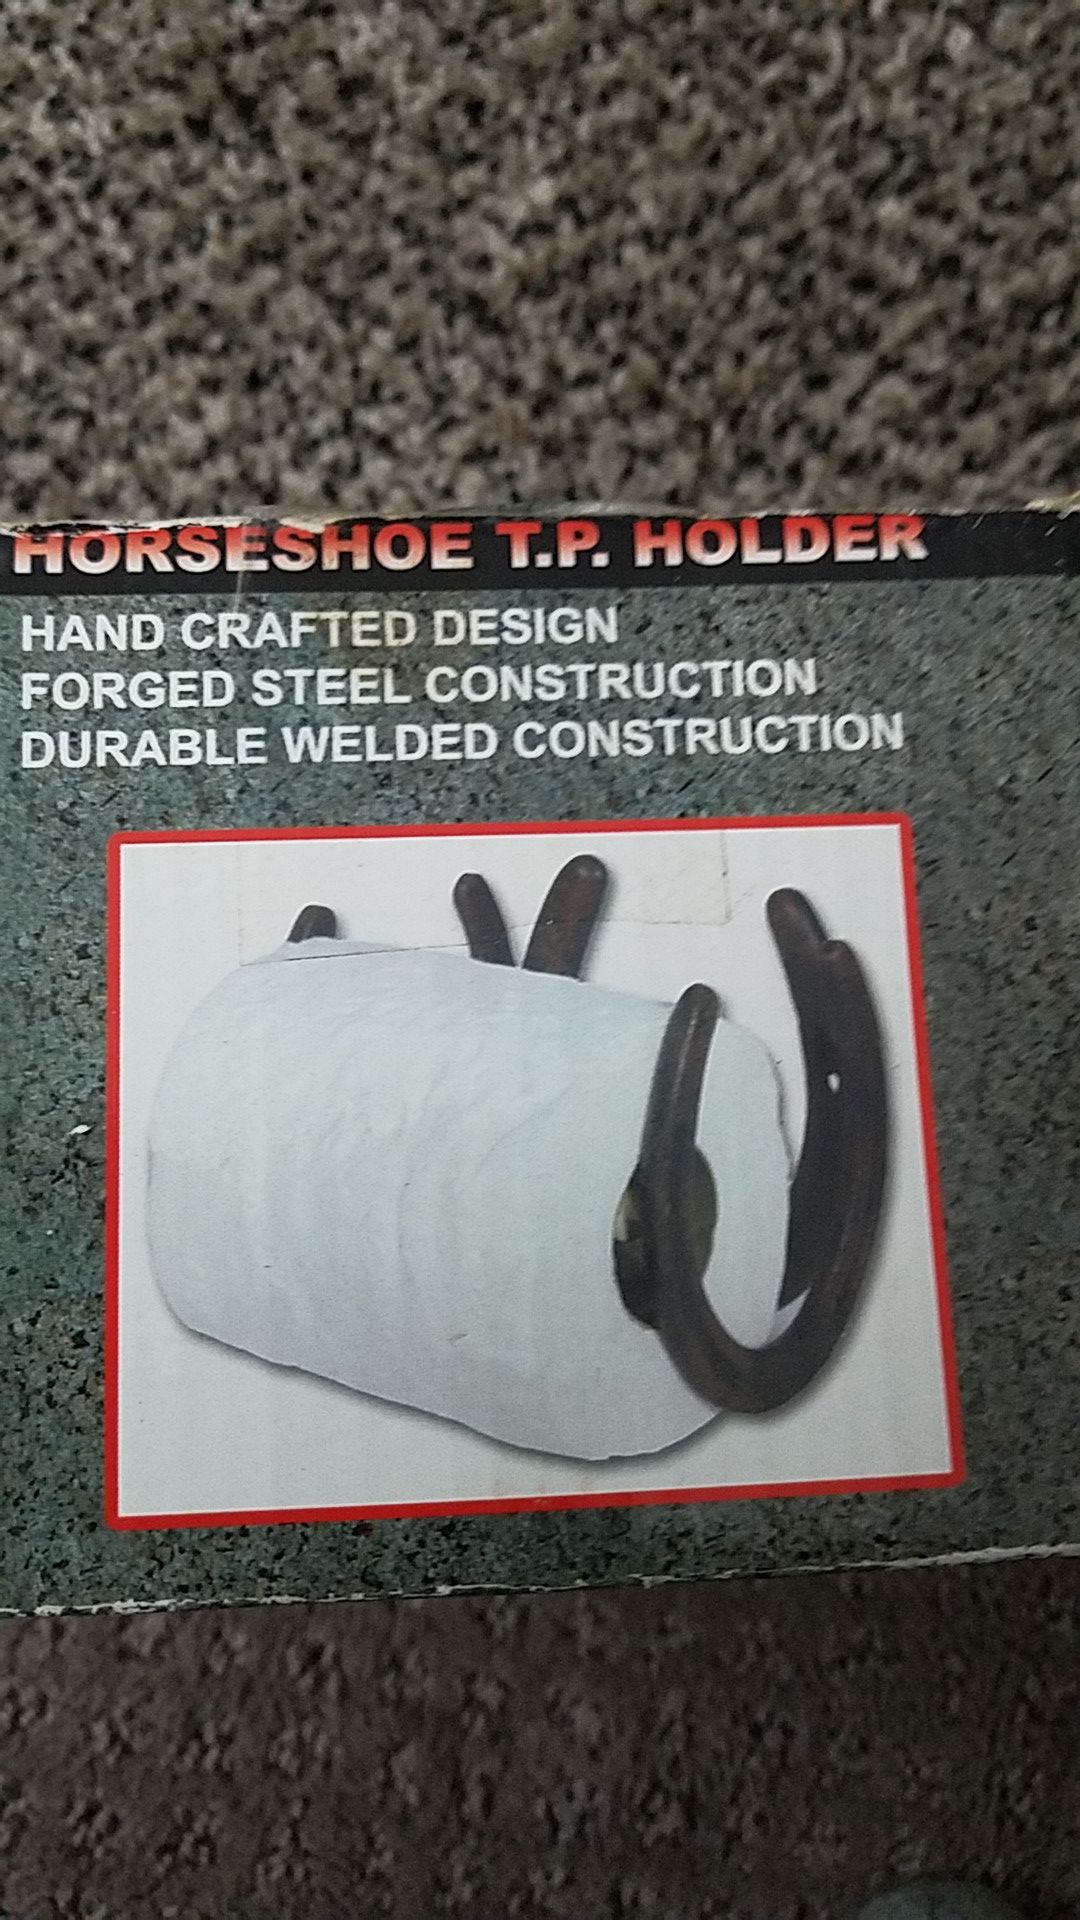 Horseshoe toliet paper holder